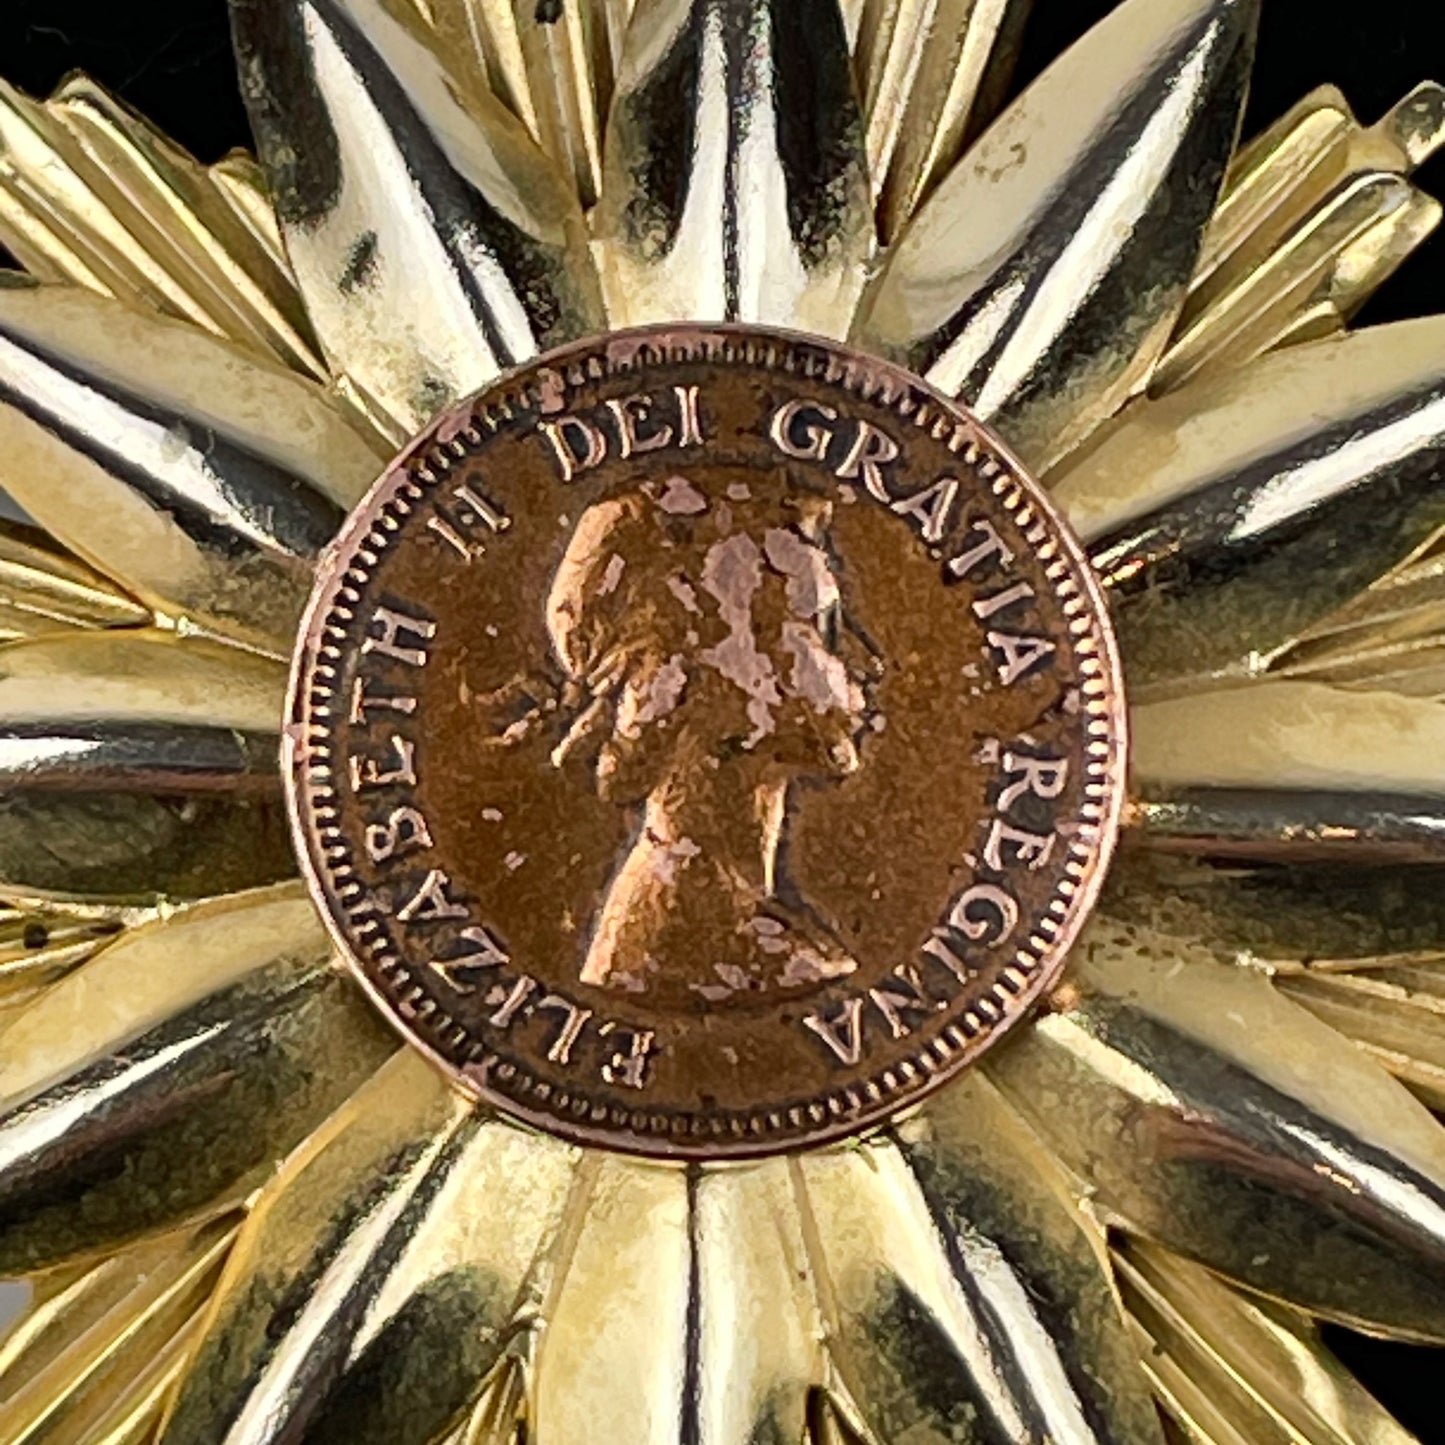 Queen Elizabeth II Dei Gratia Regina Coin Starburst Brooch